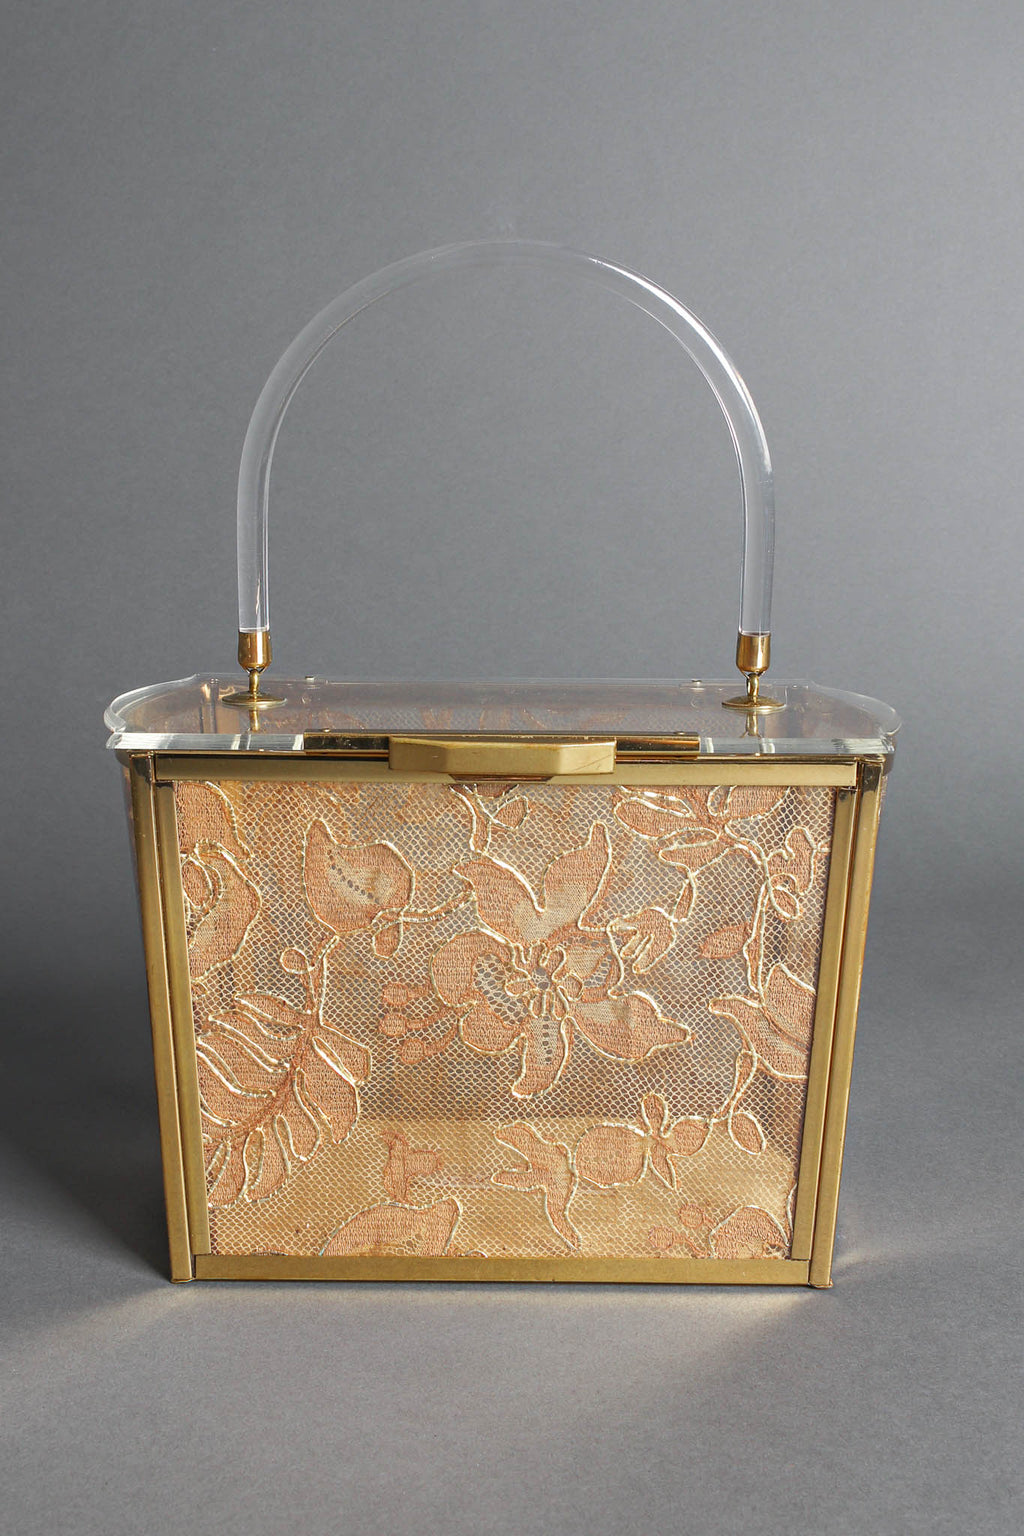 Vintage Lucite Box Purse by Myles Originals for Saks Fifth Avenue. Sus